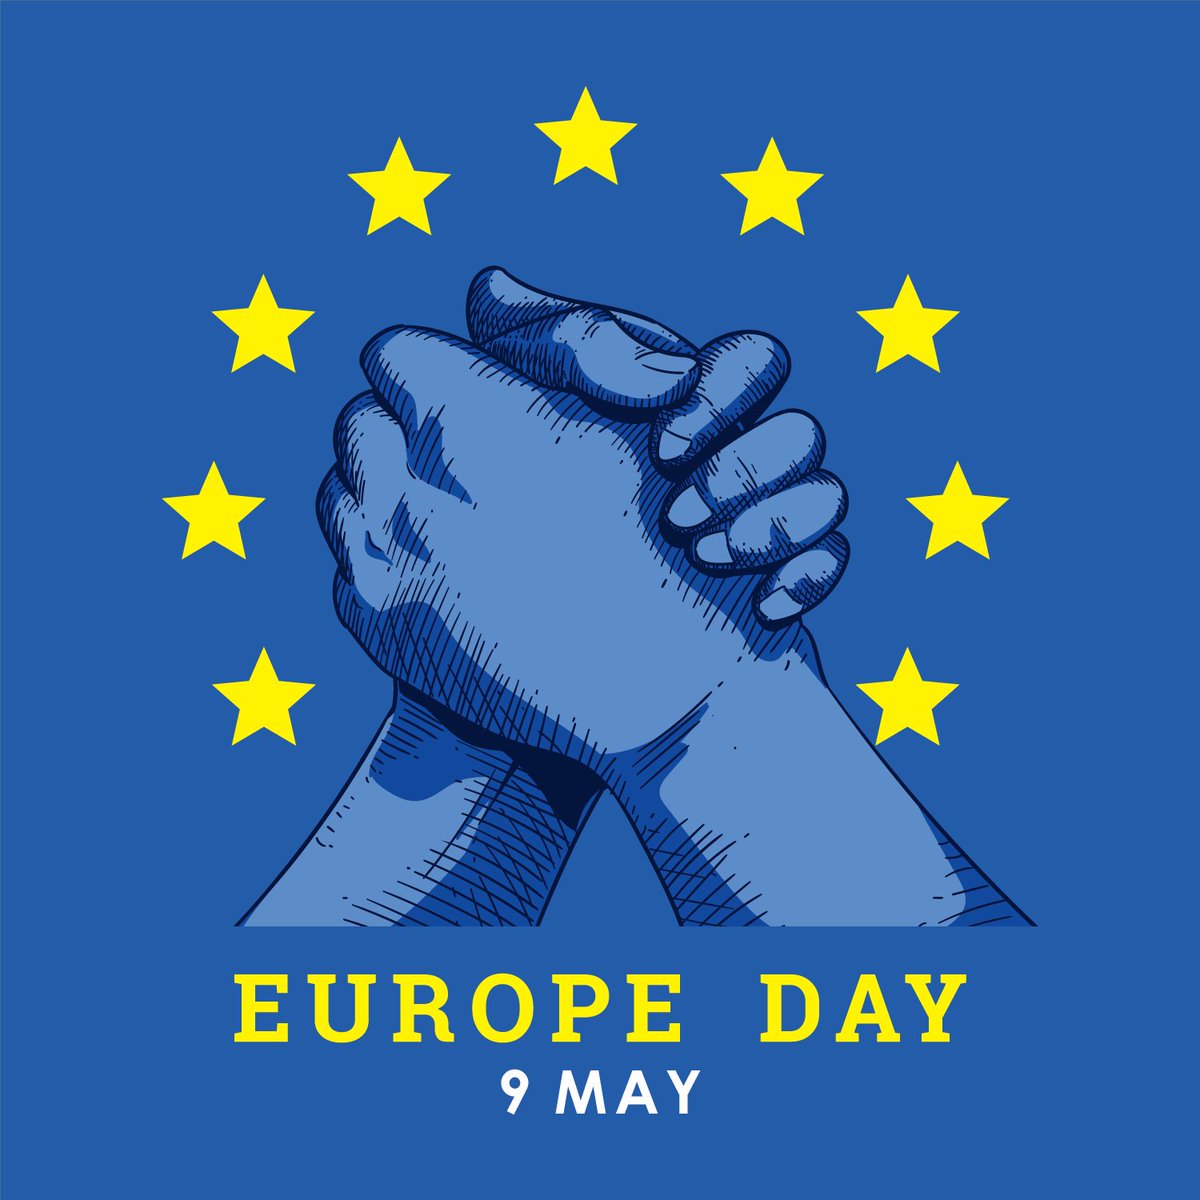 Happy Europe Day! 

#thinkdenbigh